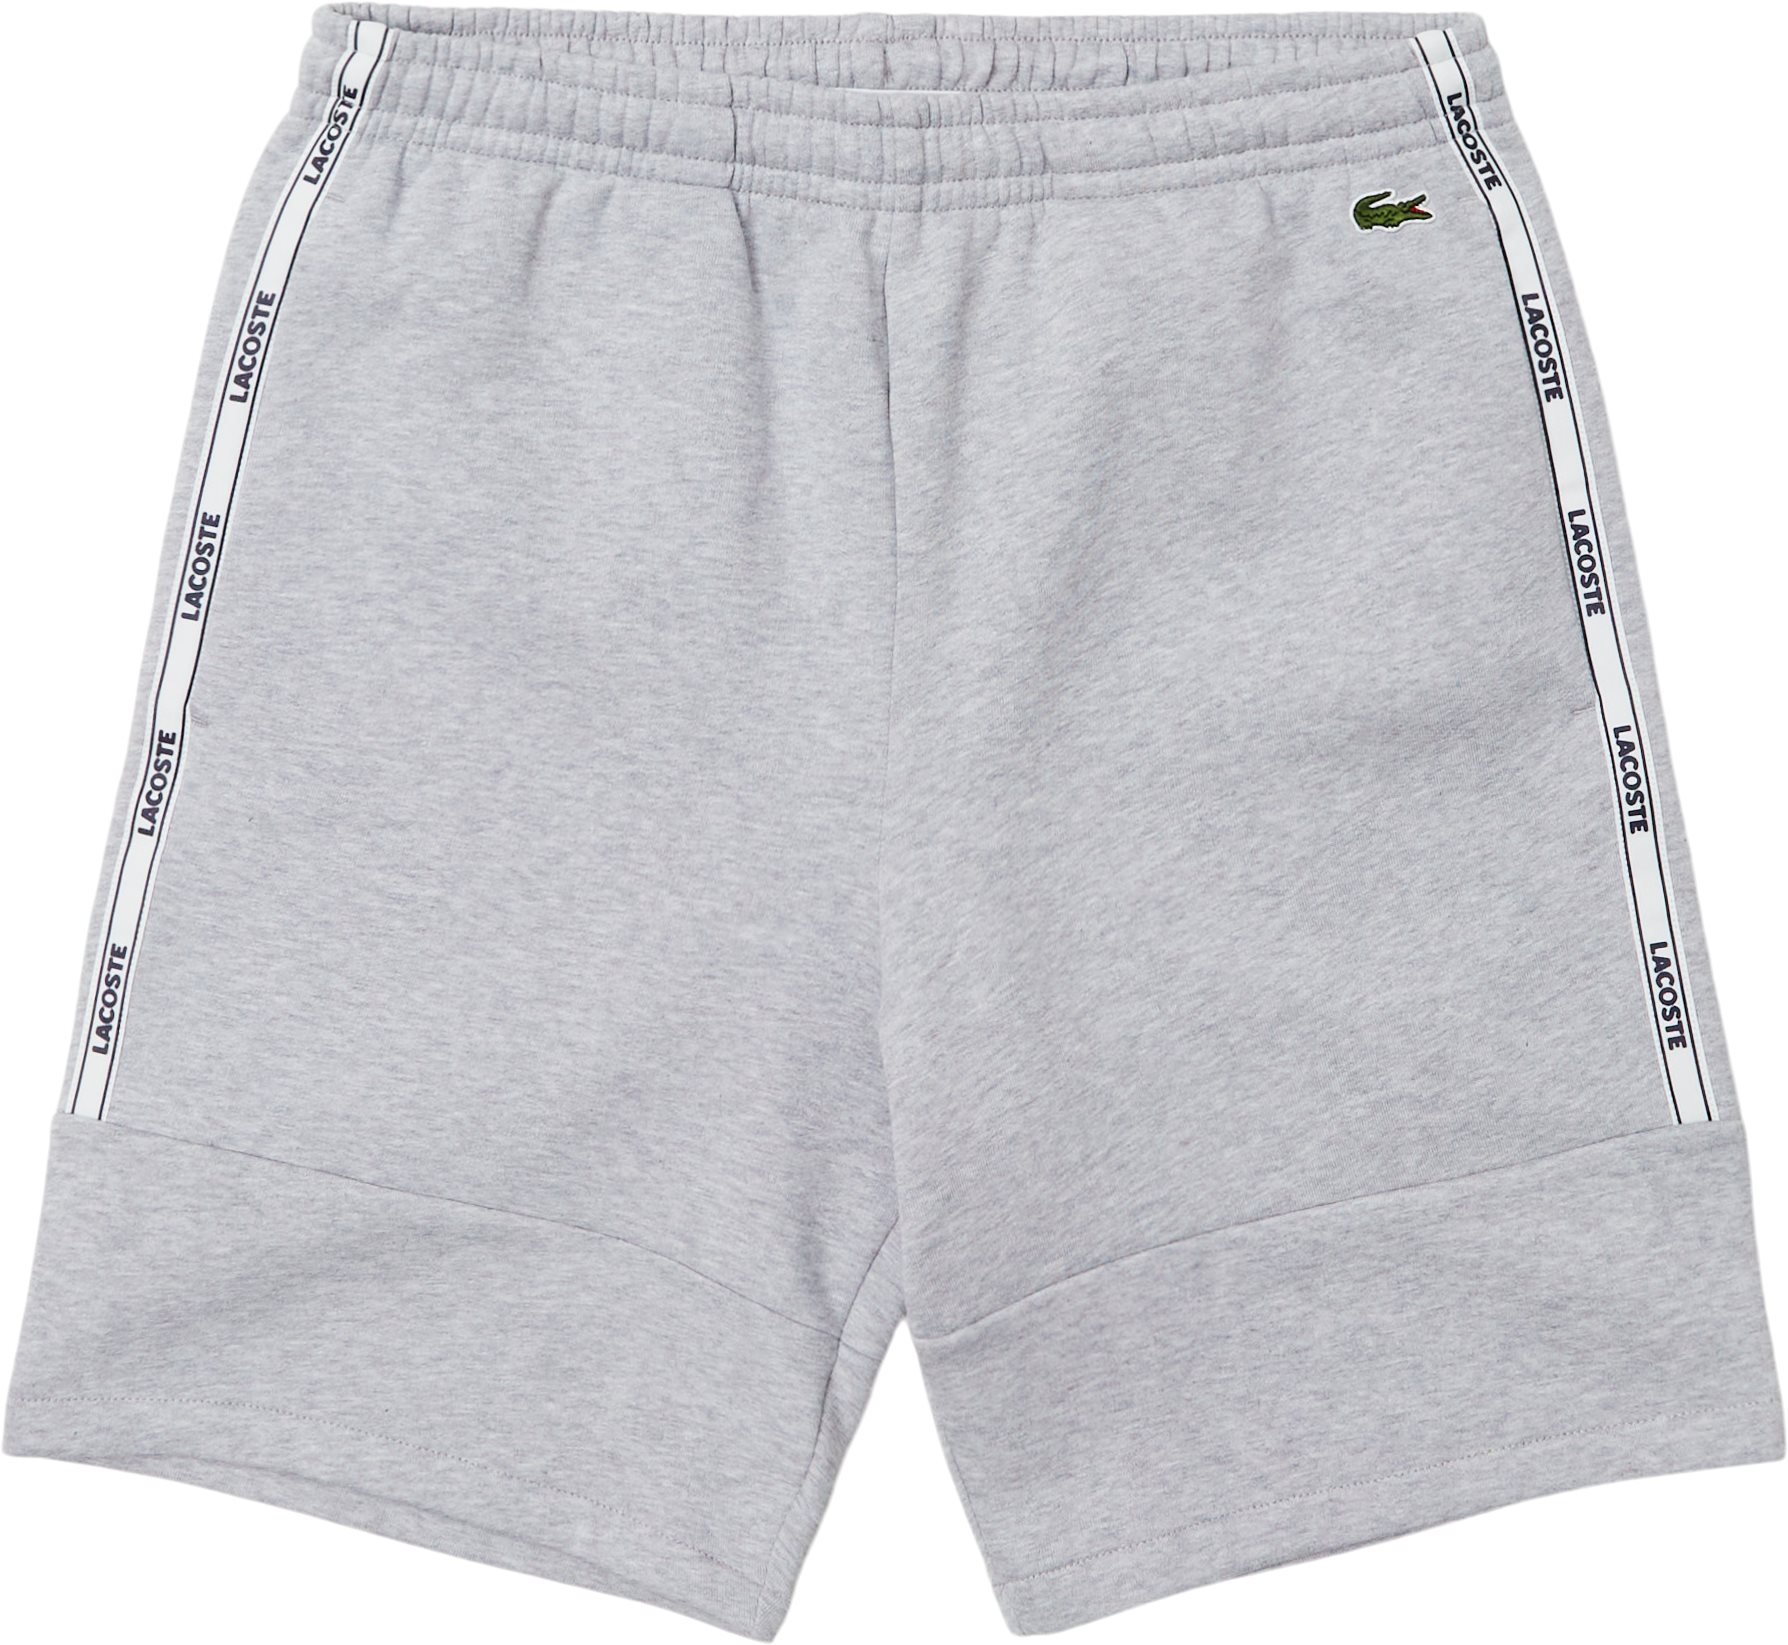 Gh1201 Sweatshorts - Shorts - Regular fit - Grey